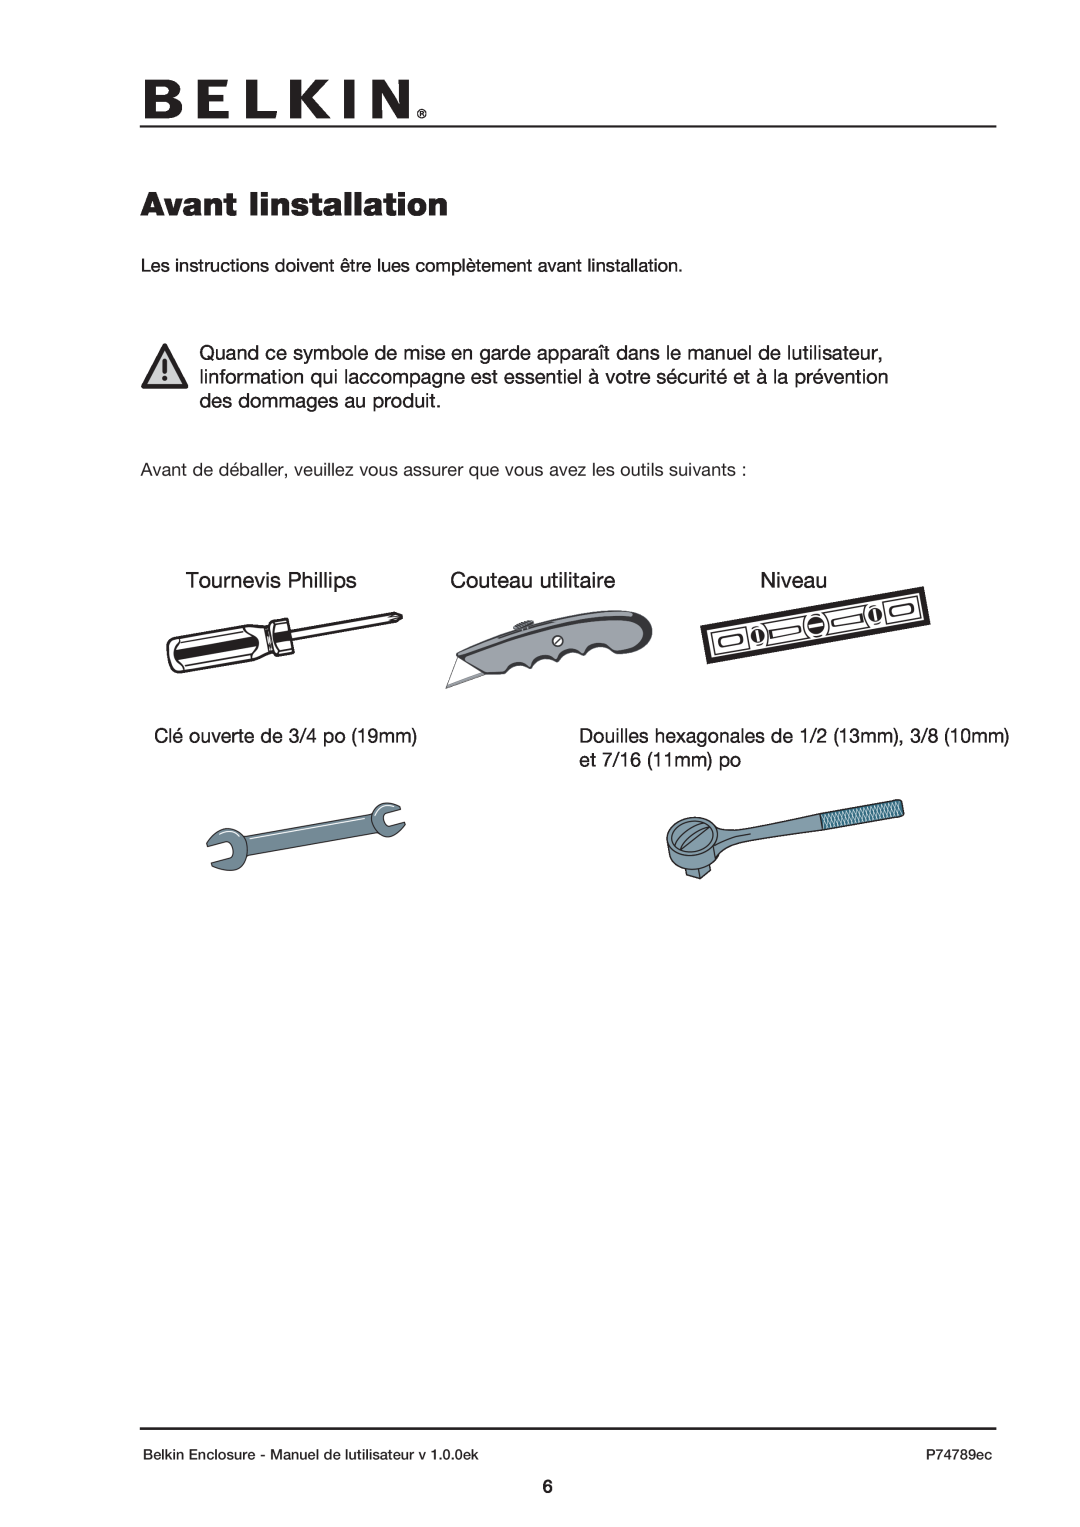 Belkin 42U user manual Avant linstallation, Tournevis Phillips, Couteau utilitaire, Niveau 